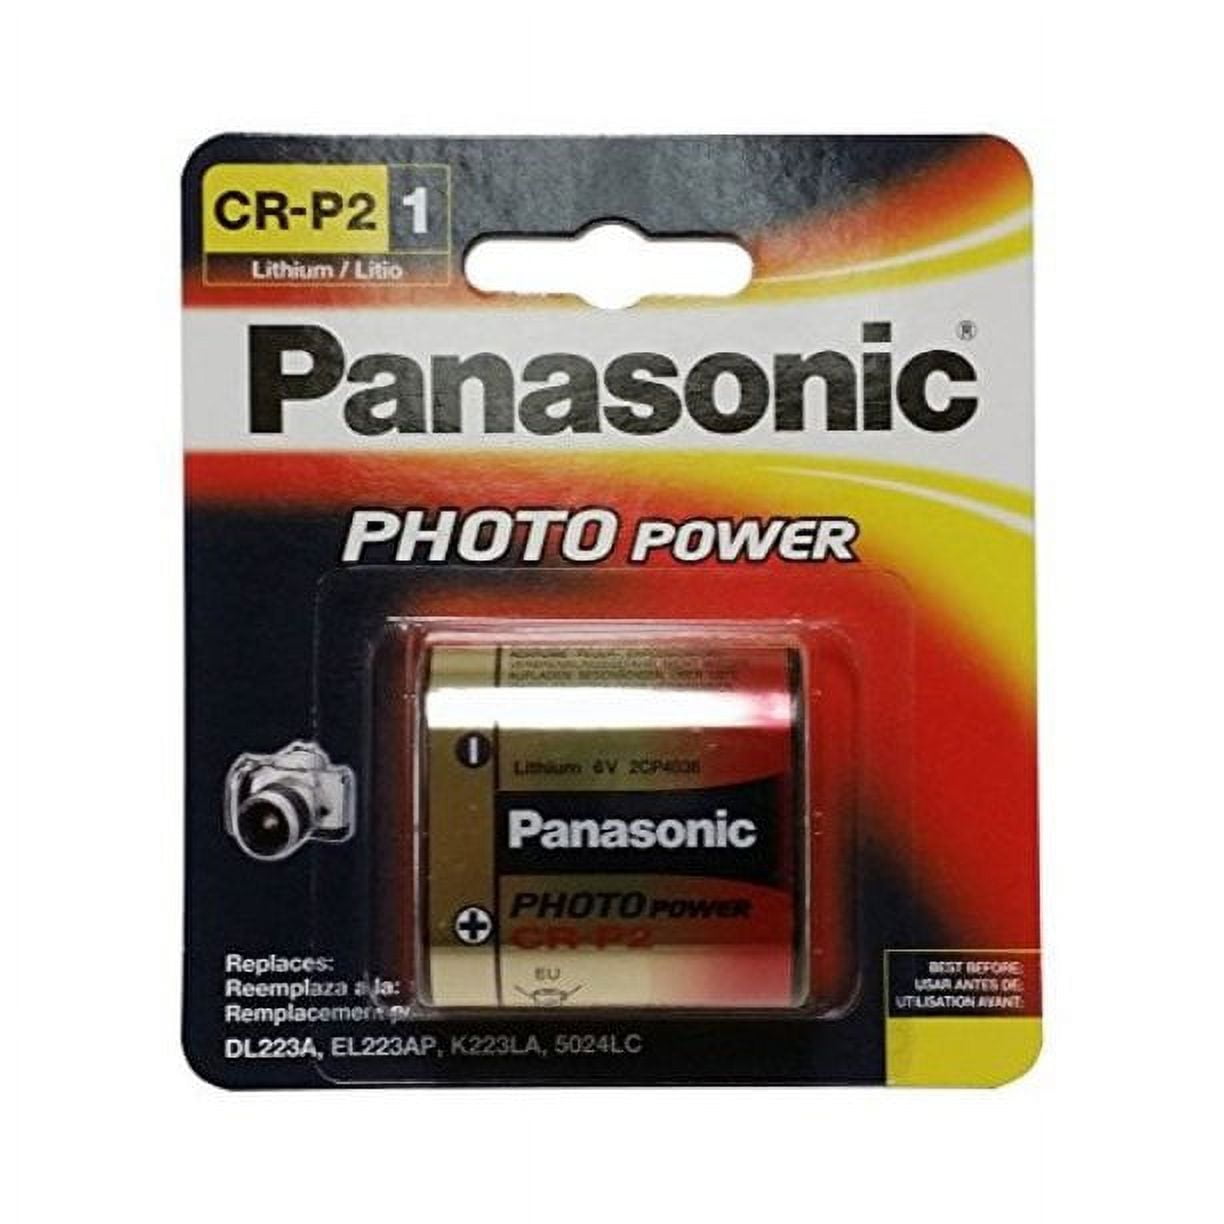 Panasonic Photo Power CR2 Battery CR-2L/1BP